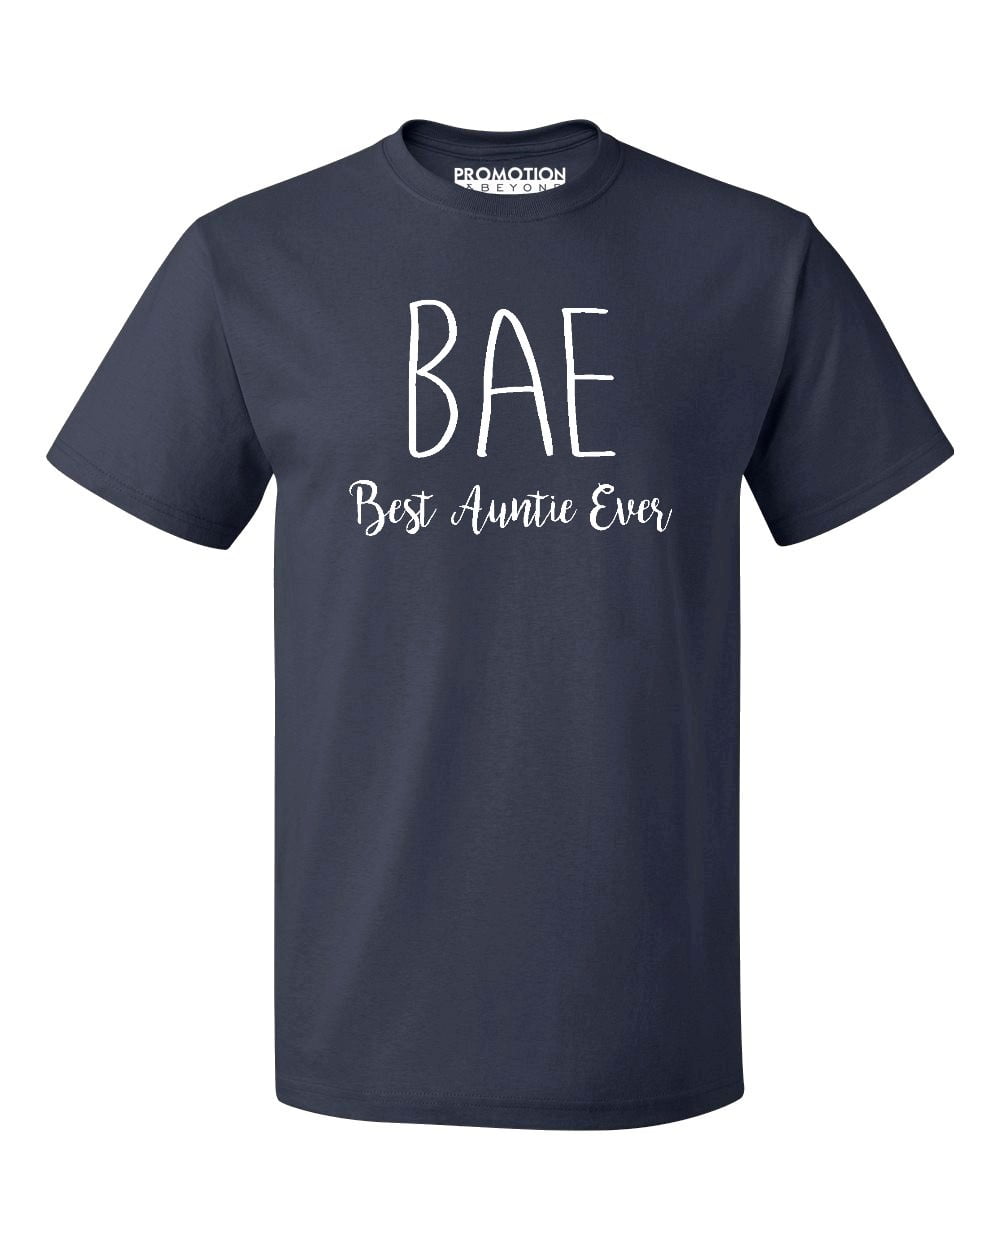 P&B BAE Best Auntie Ever Funny Men's T-shirt, Black, XL 